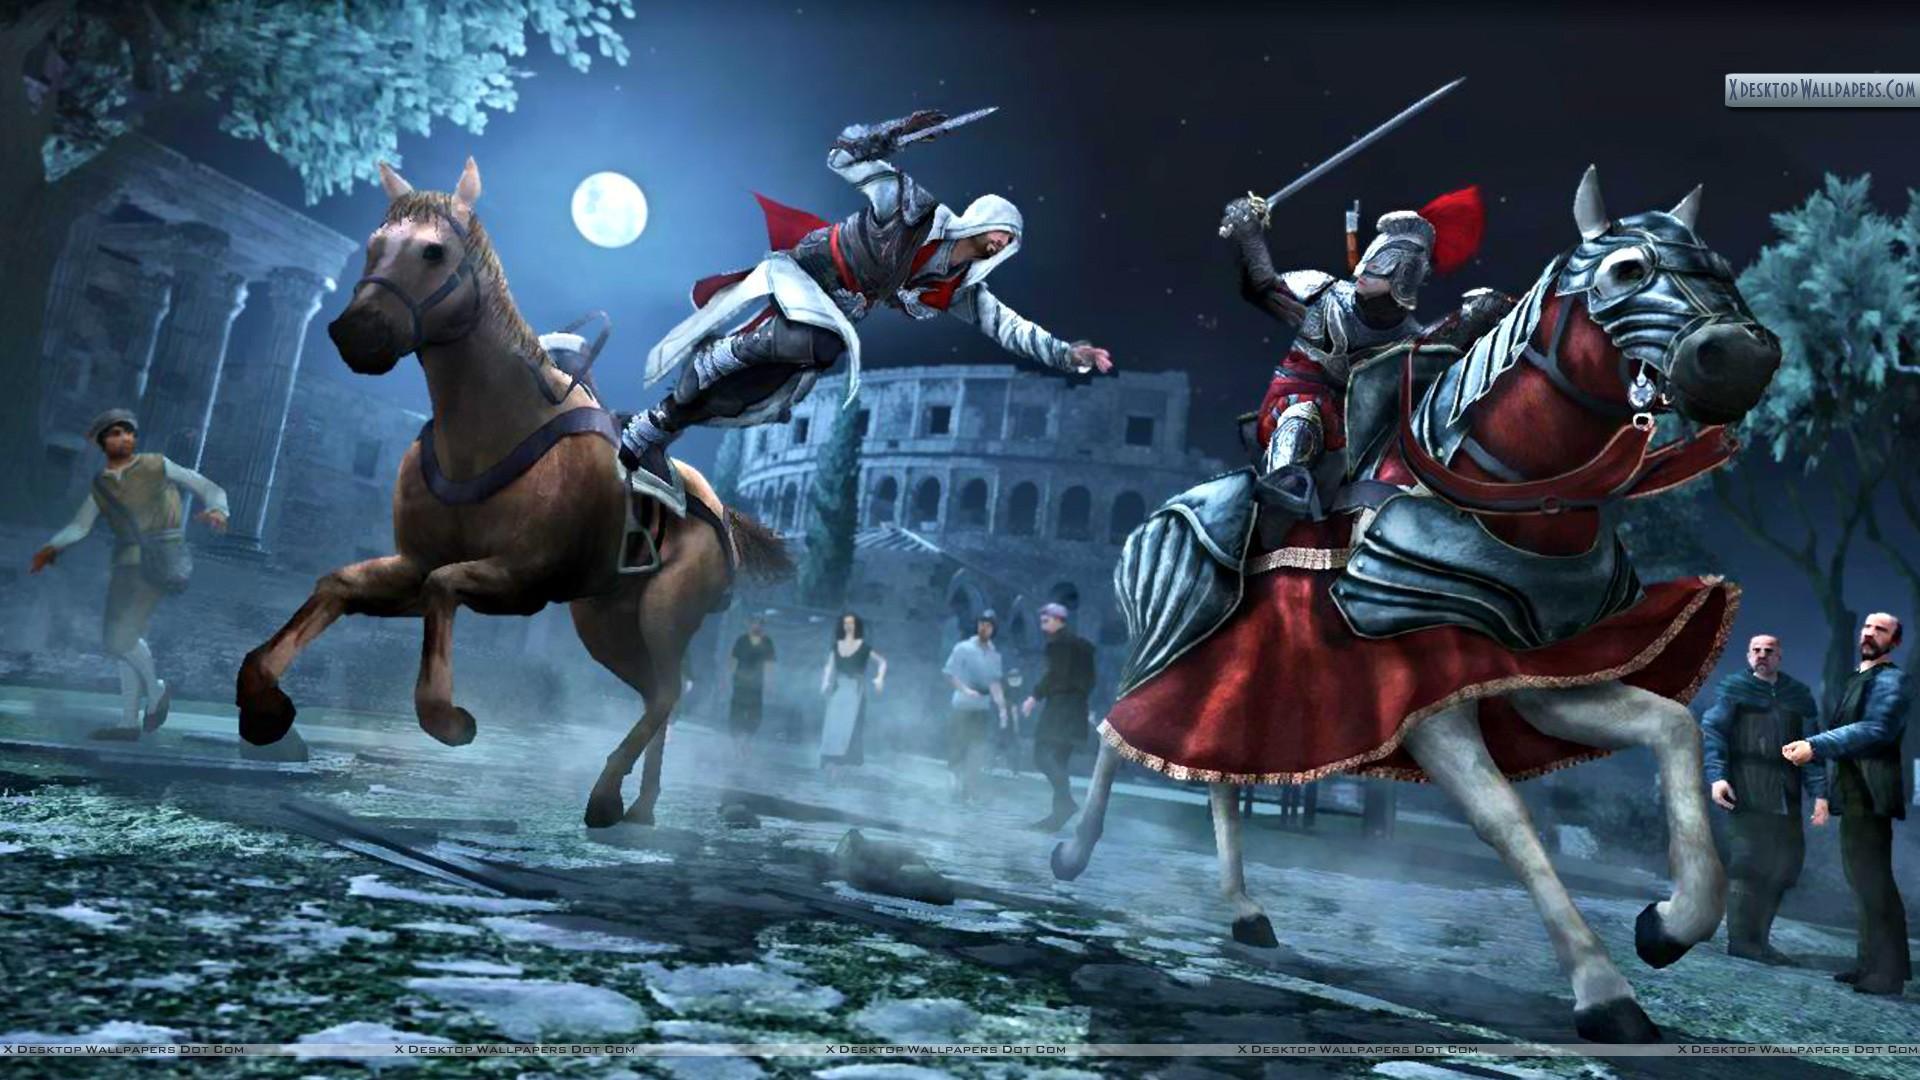 Assassin's Creed Brotherhood Wallpaper HD 1920x1080 px, D68